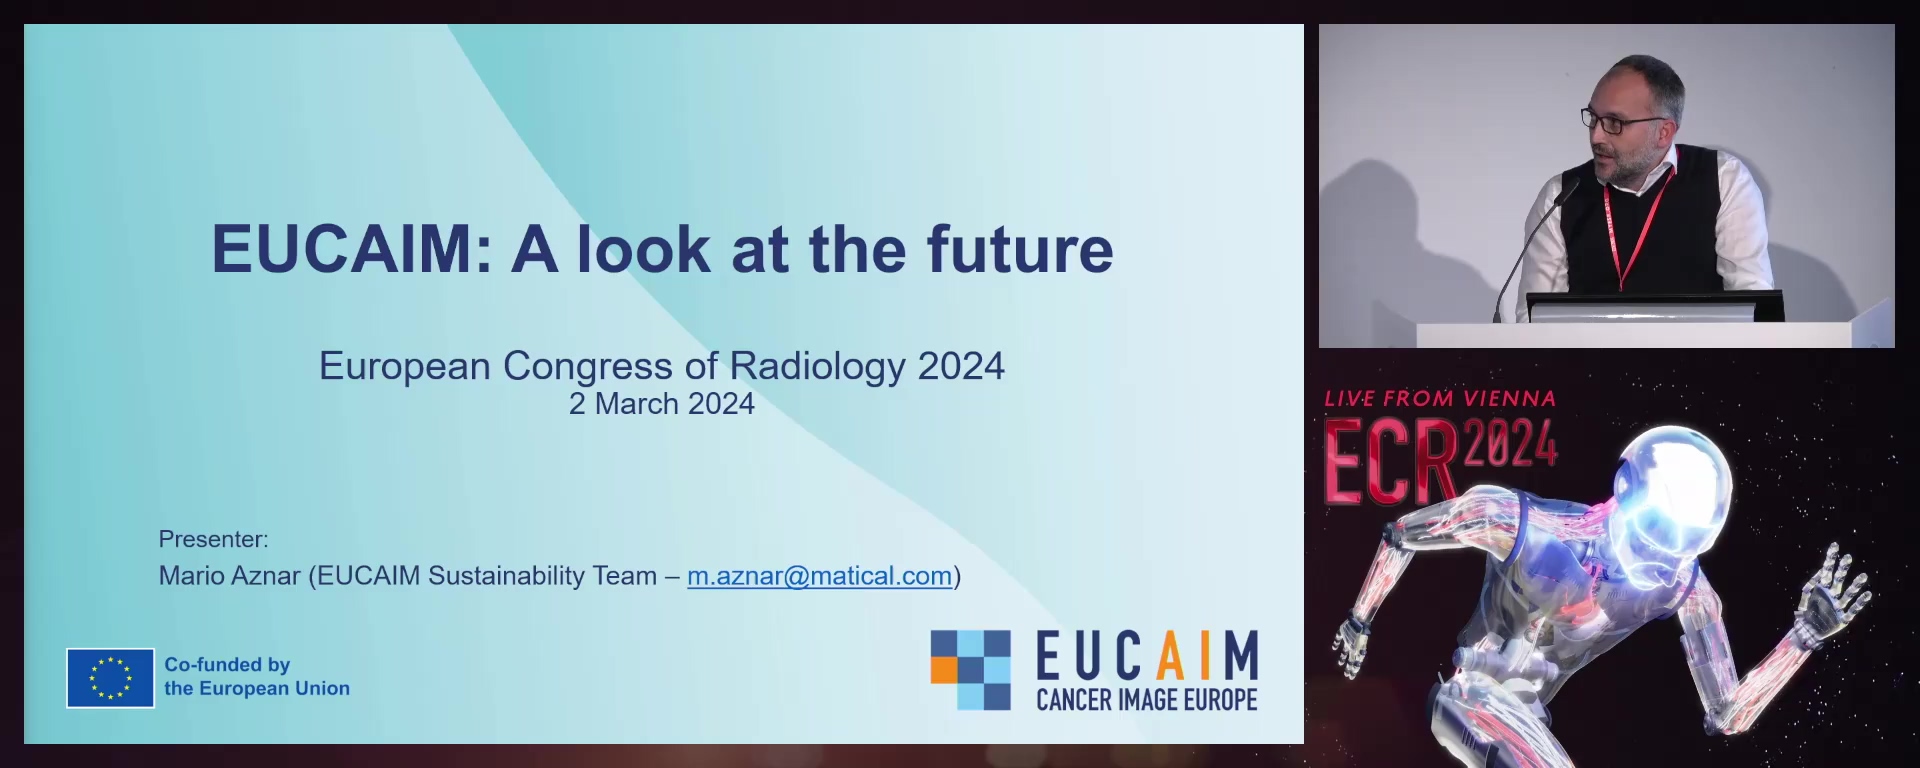 EUCAIM and the EU Cancer Imaging Initiative: a look at the future